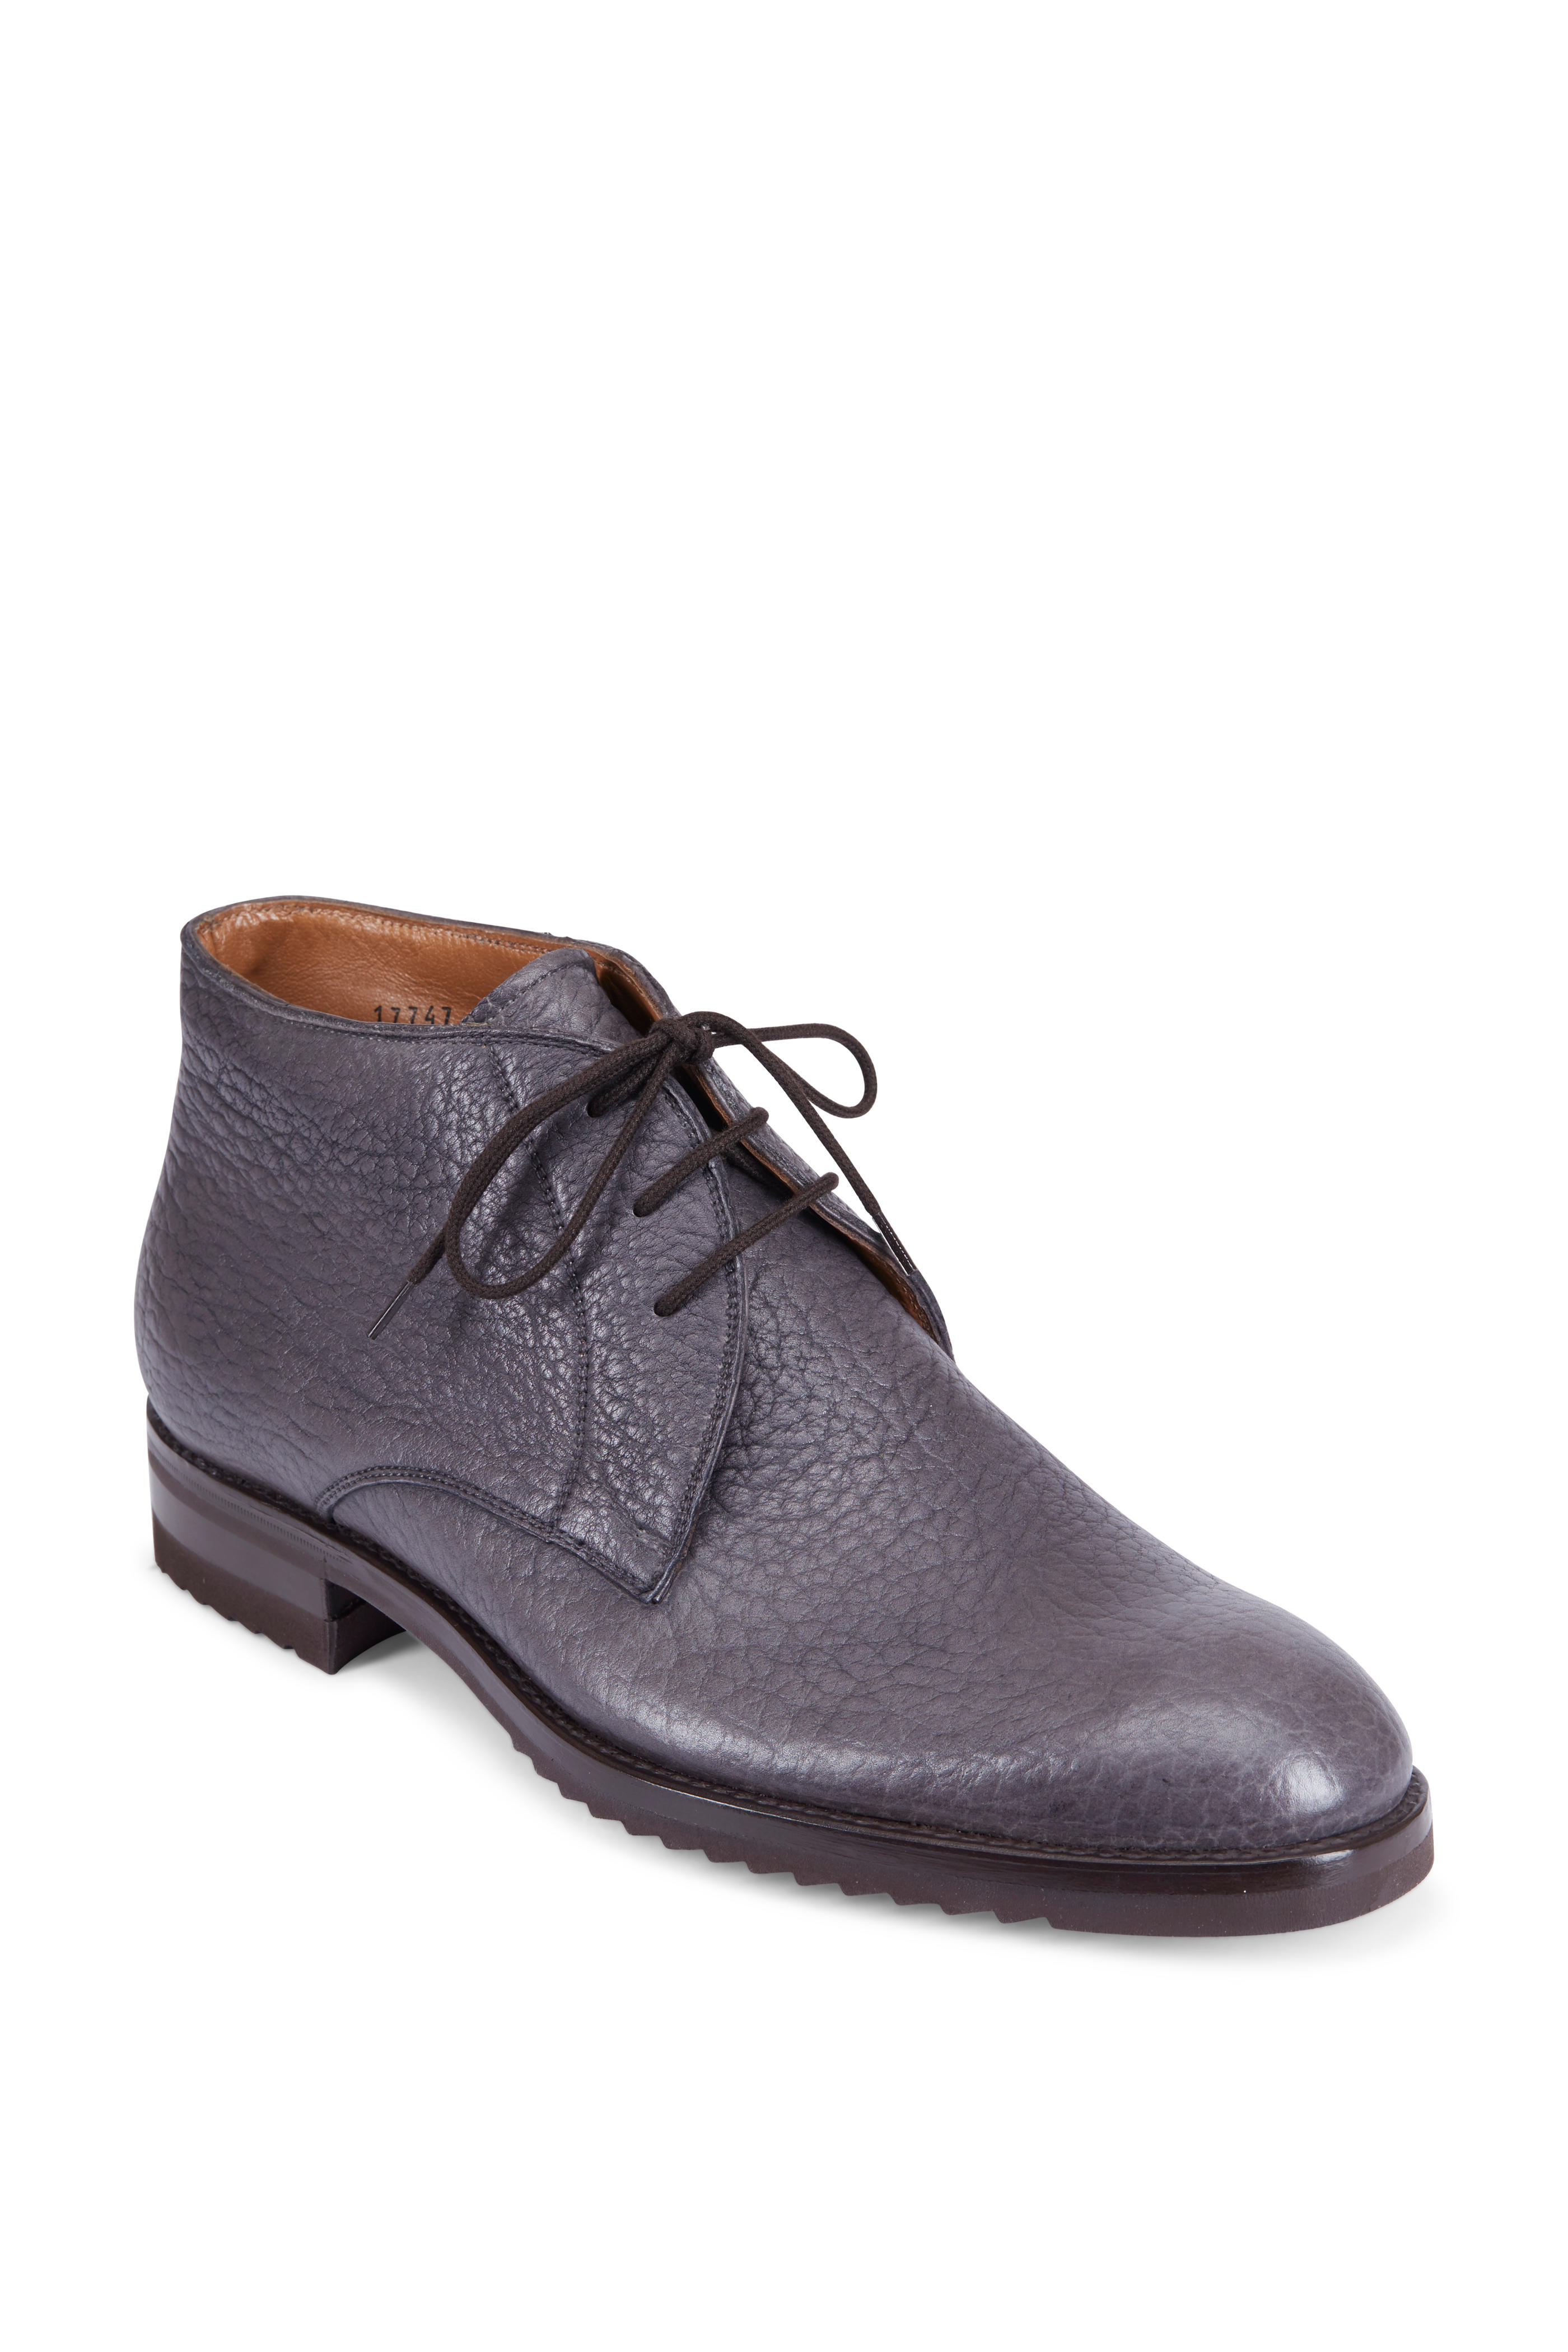 grey leather chukka boots